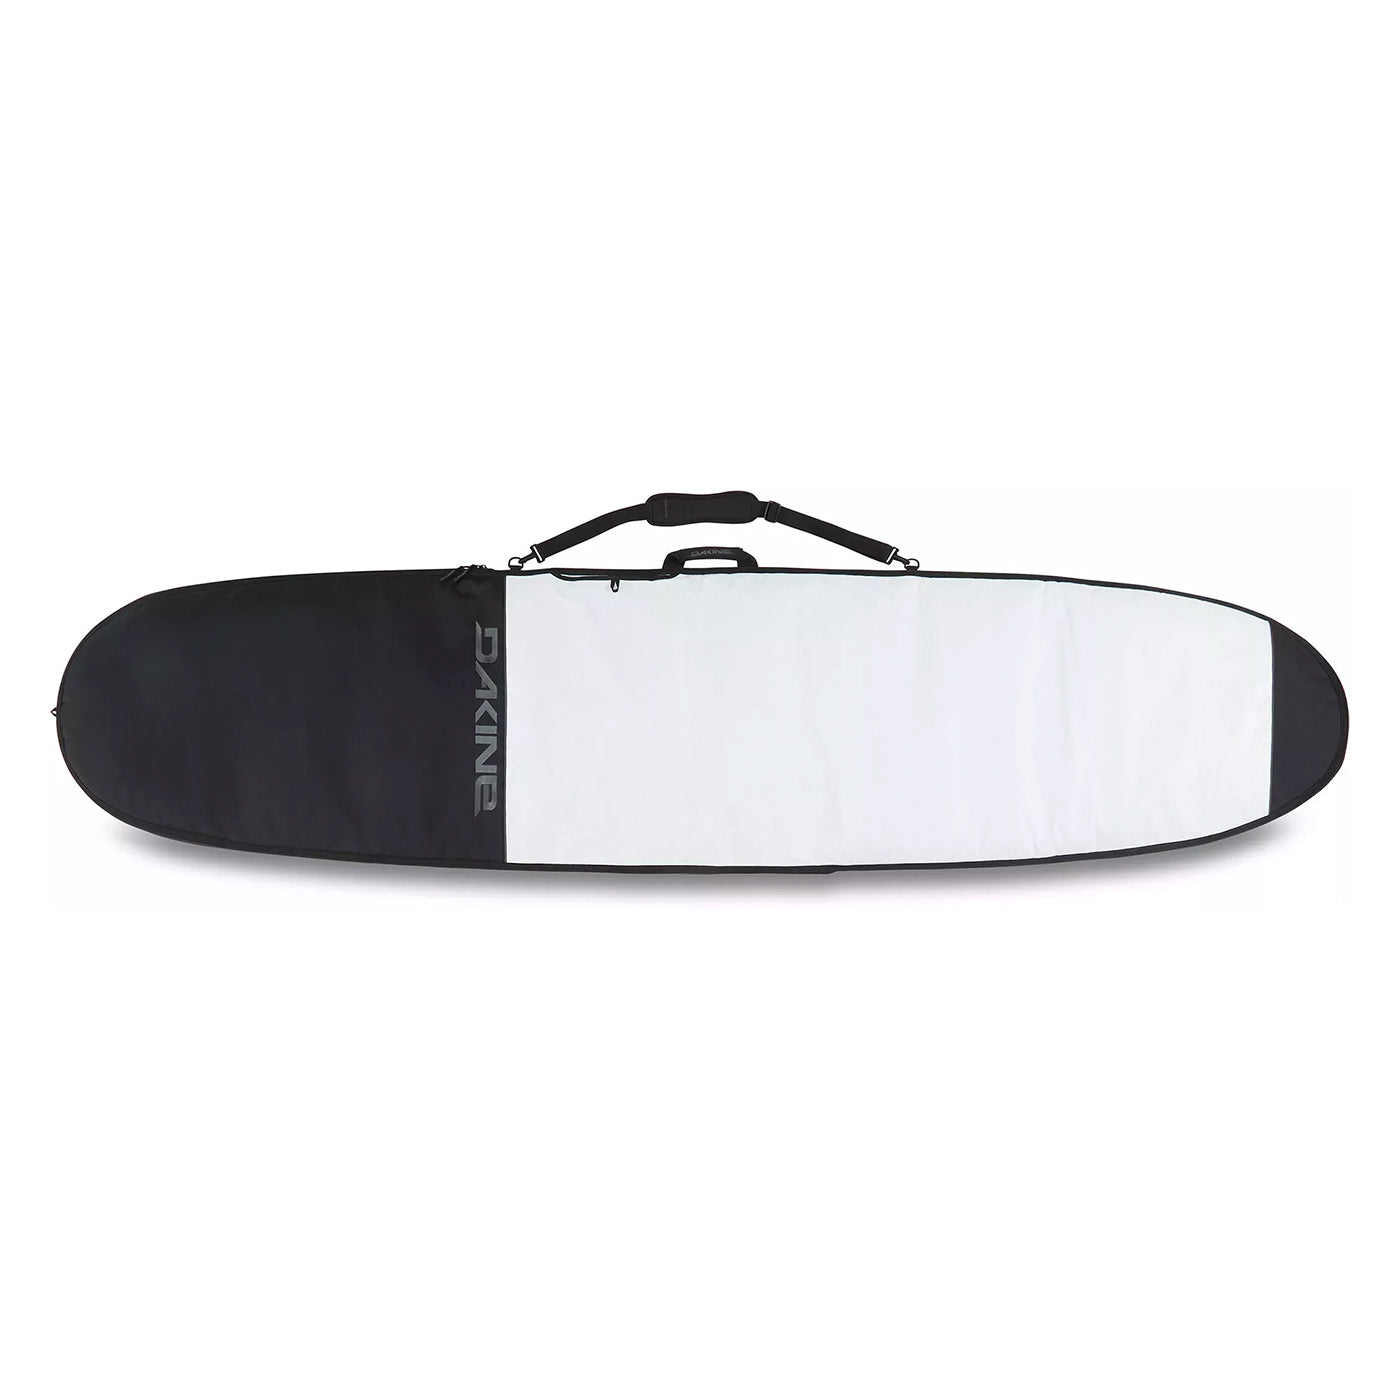 Dakine | Daylight Surfboard Bag - Noserider | White